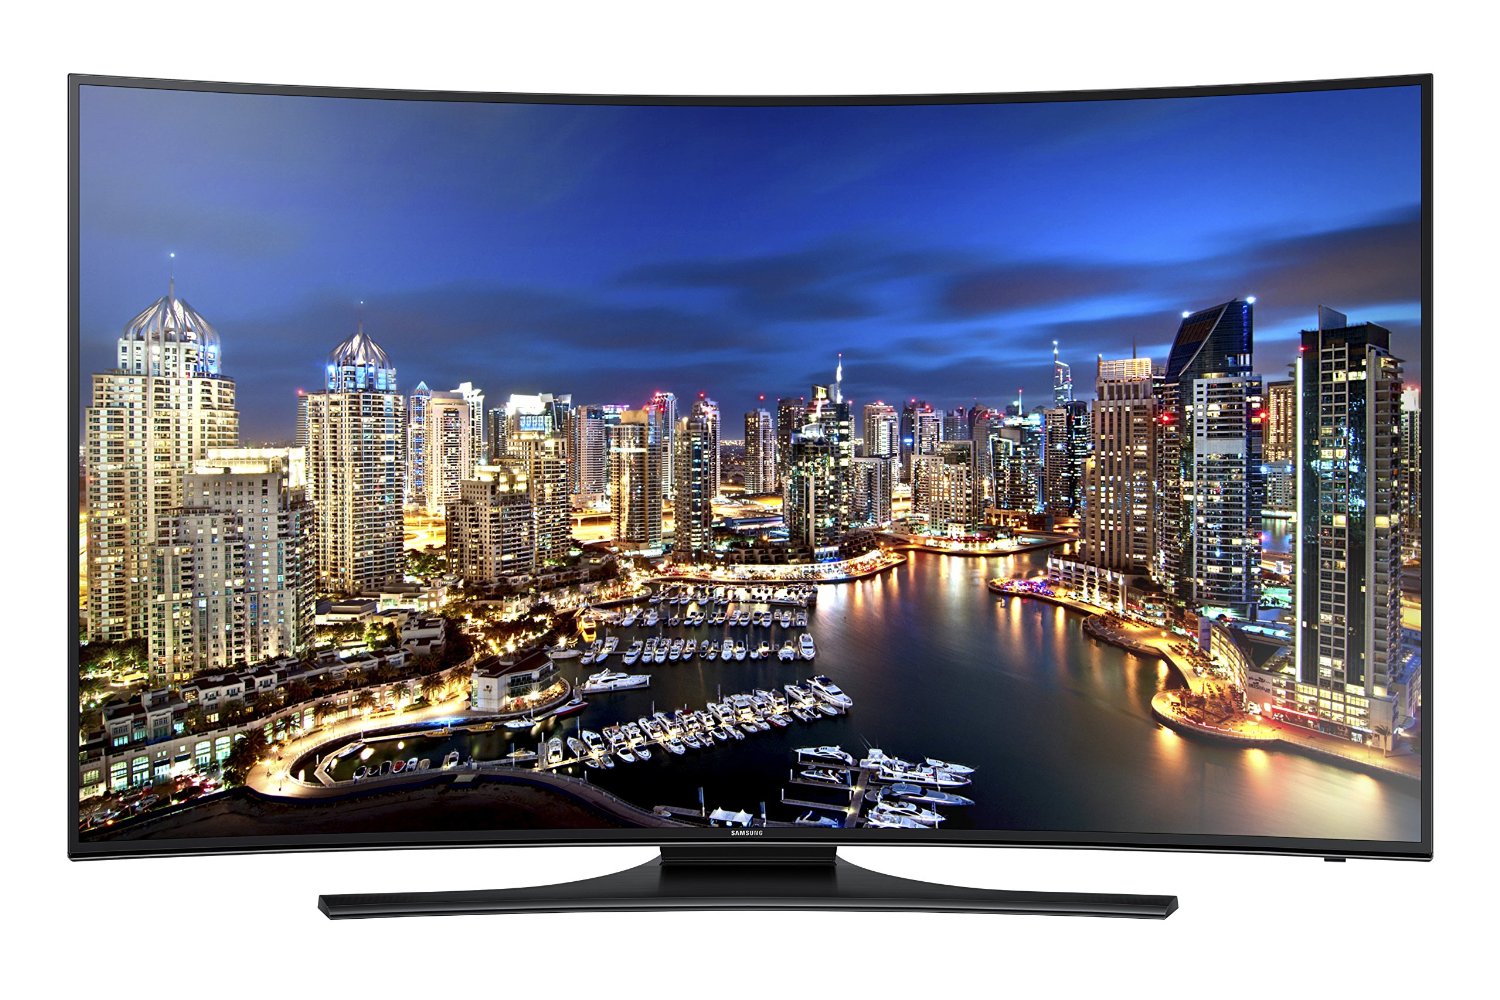 Samsung UN55HU7250 Curved 55Inch 4K Ultra HD 120Hz Smart LED TV Review